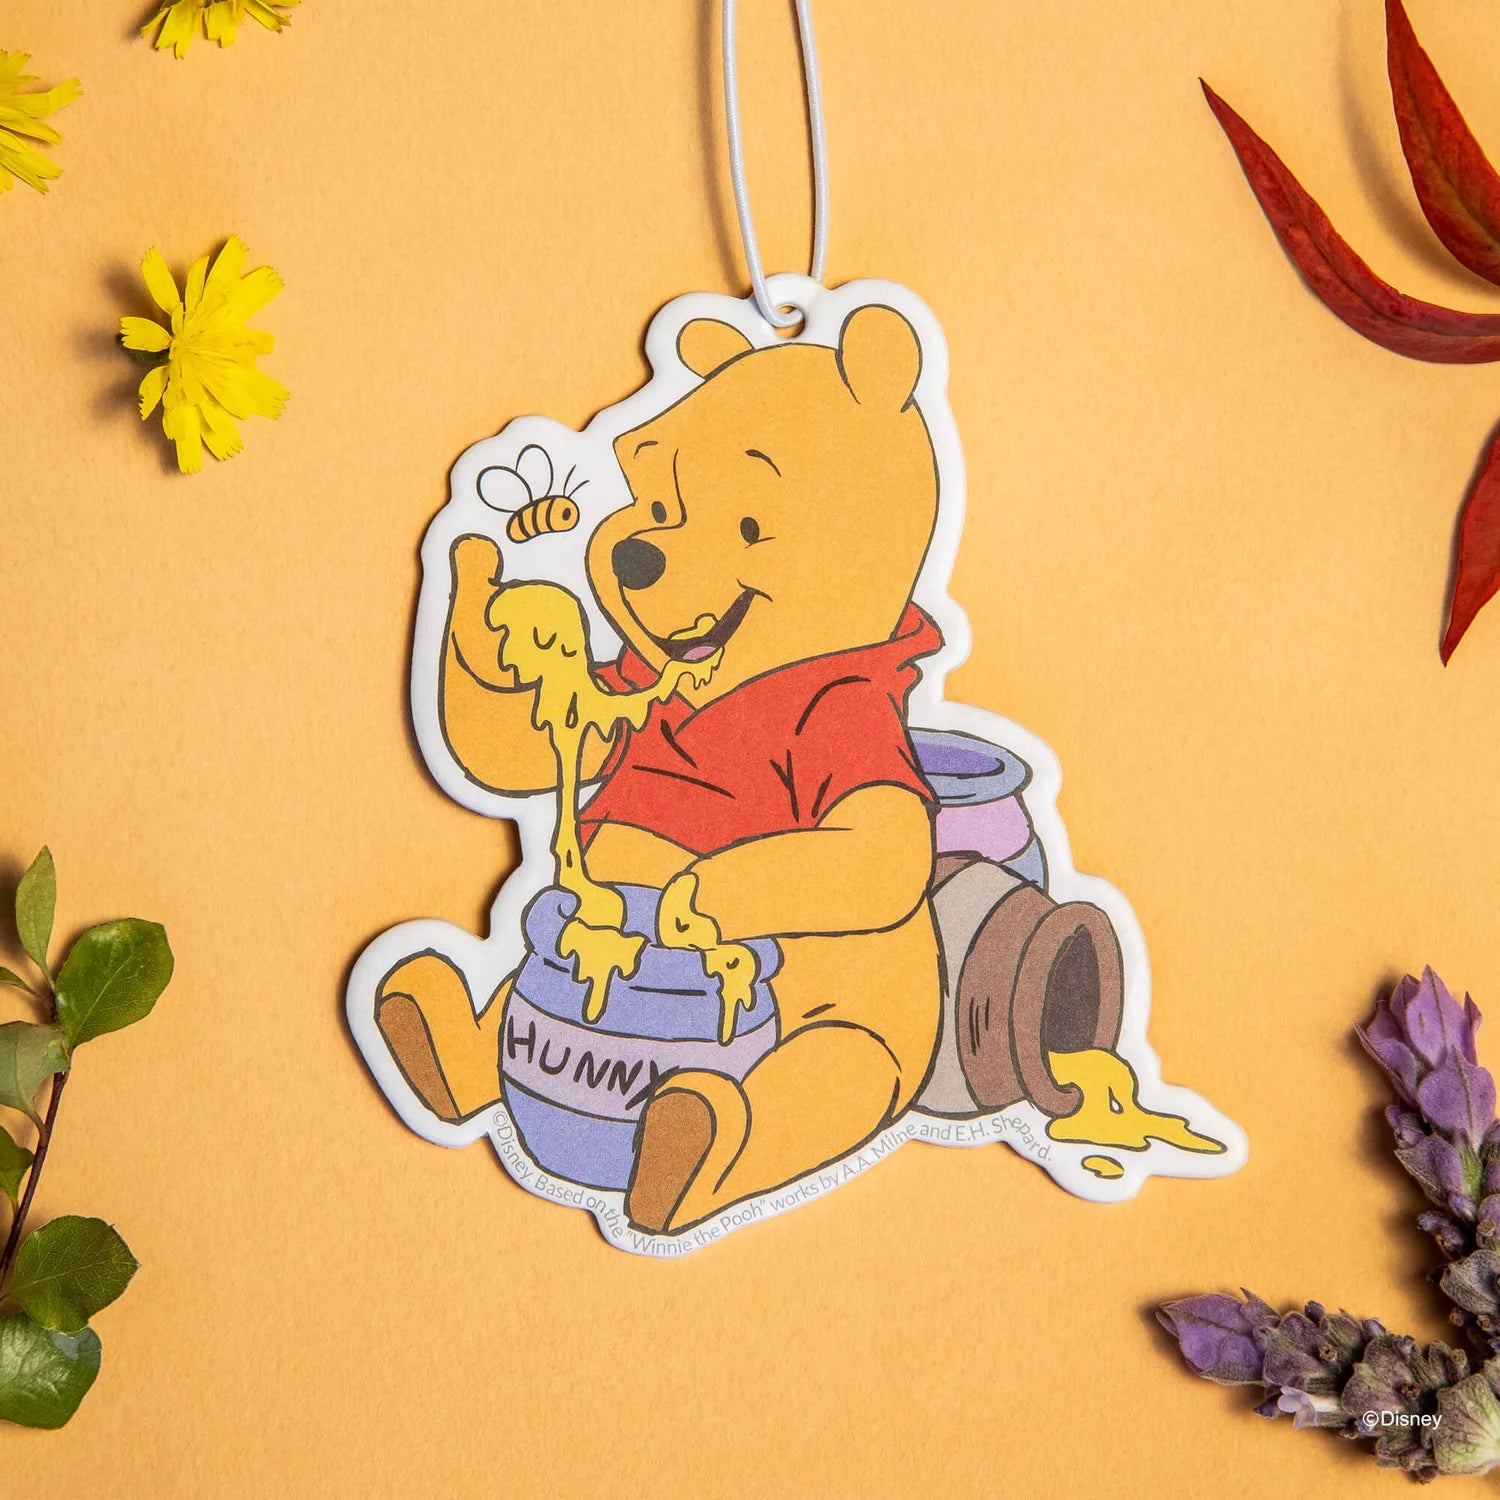 Short Story - Disney Winnie The Pooh Car Air Freshener